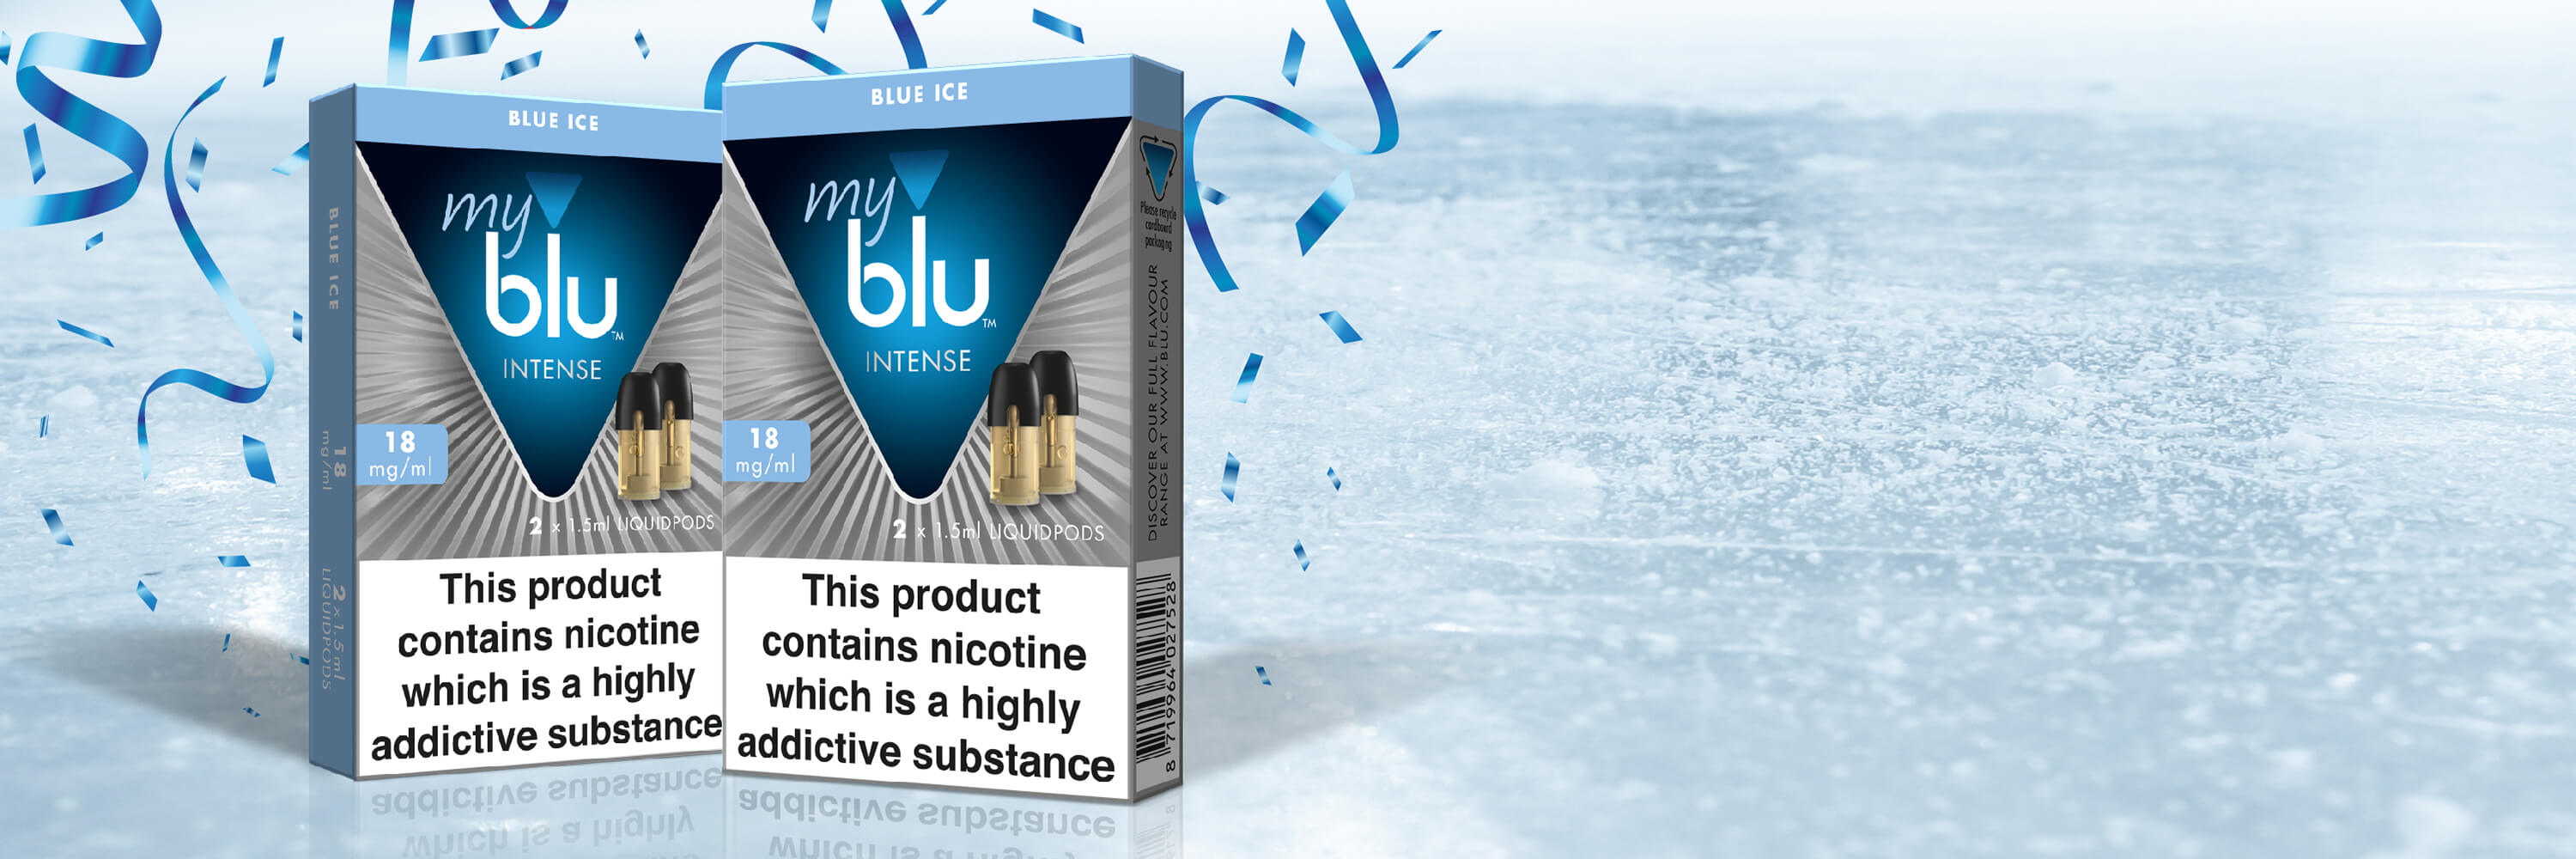 blu Launches New Intense Blue Ice Liquidpod